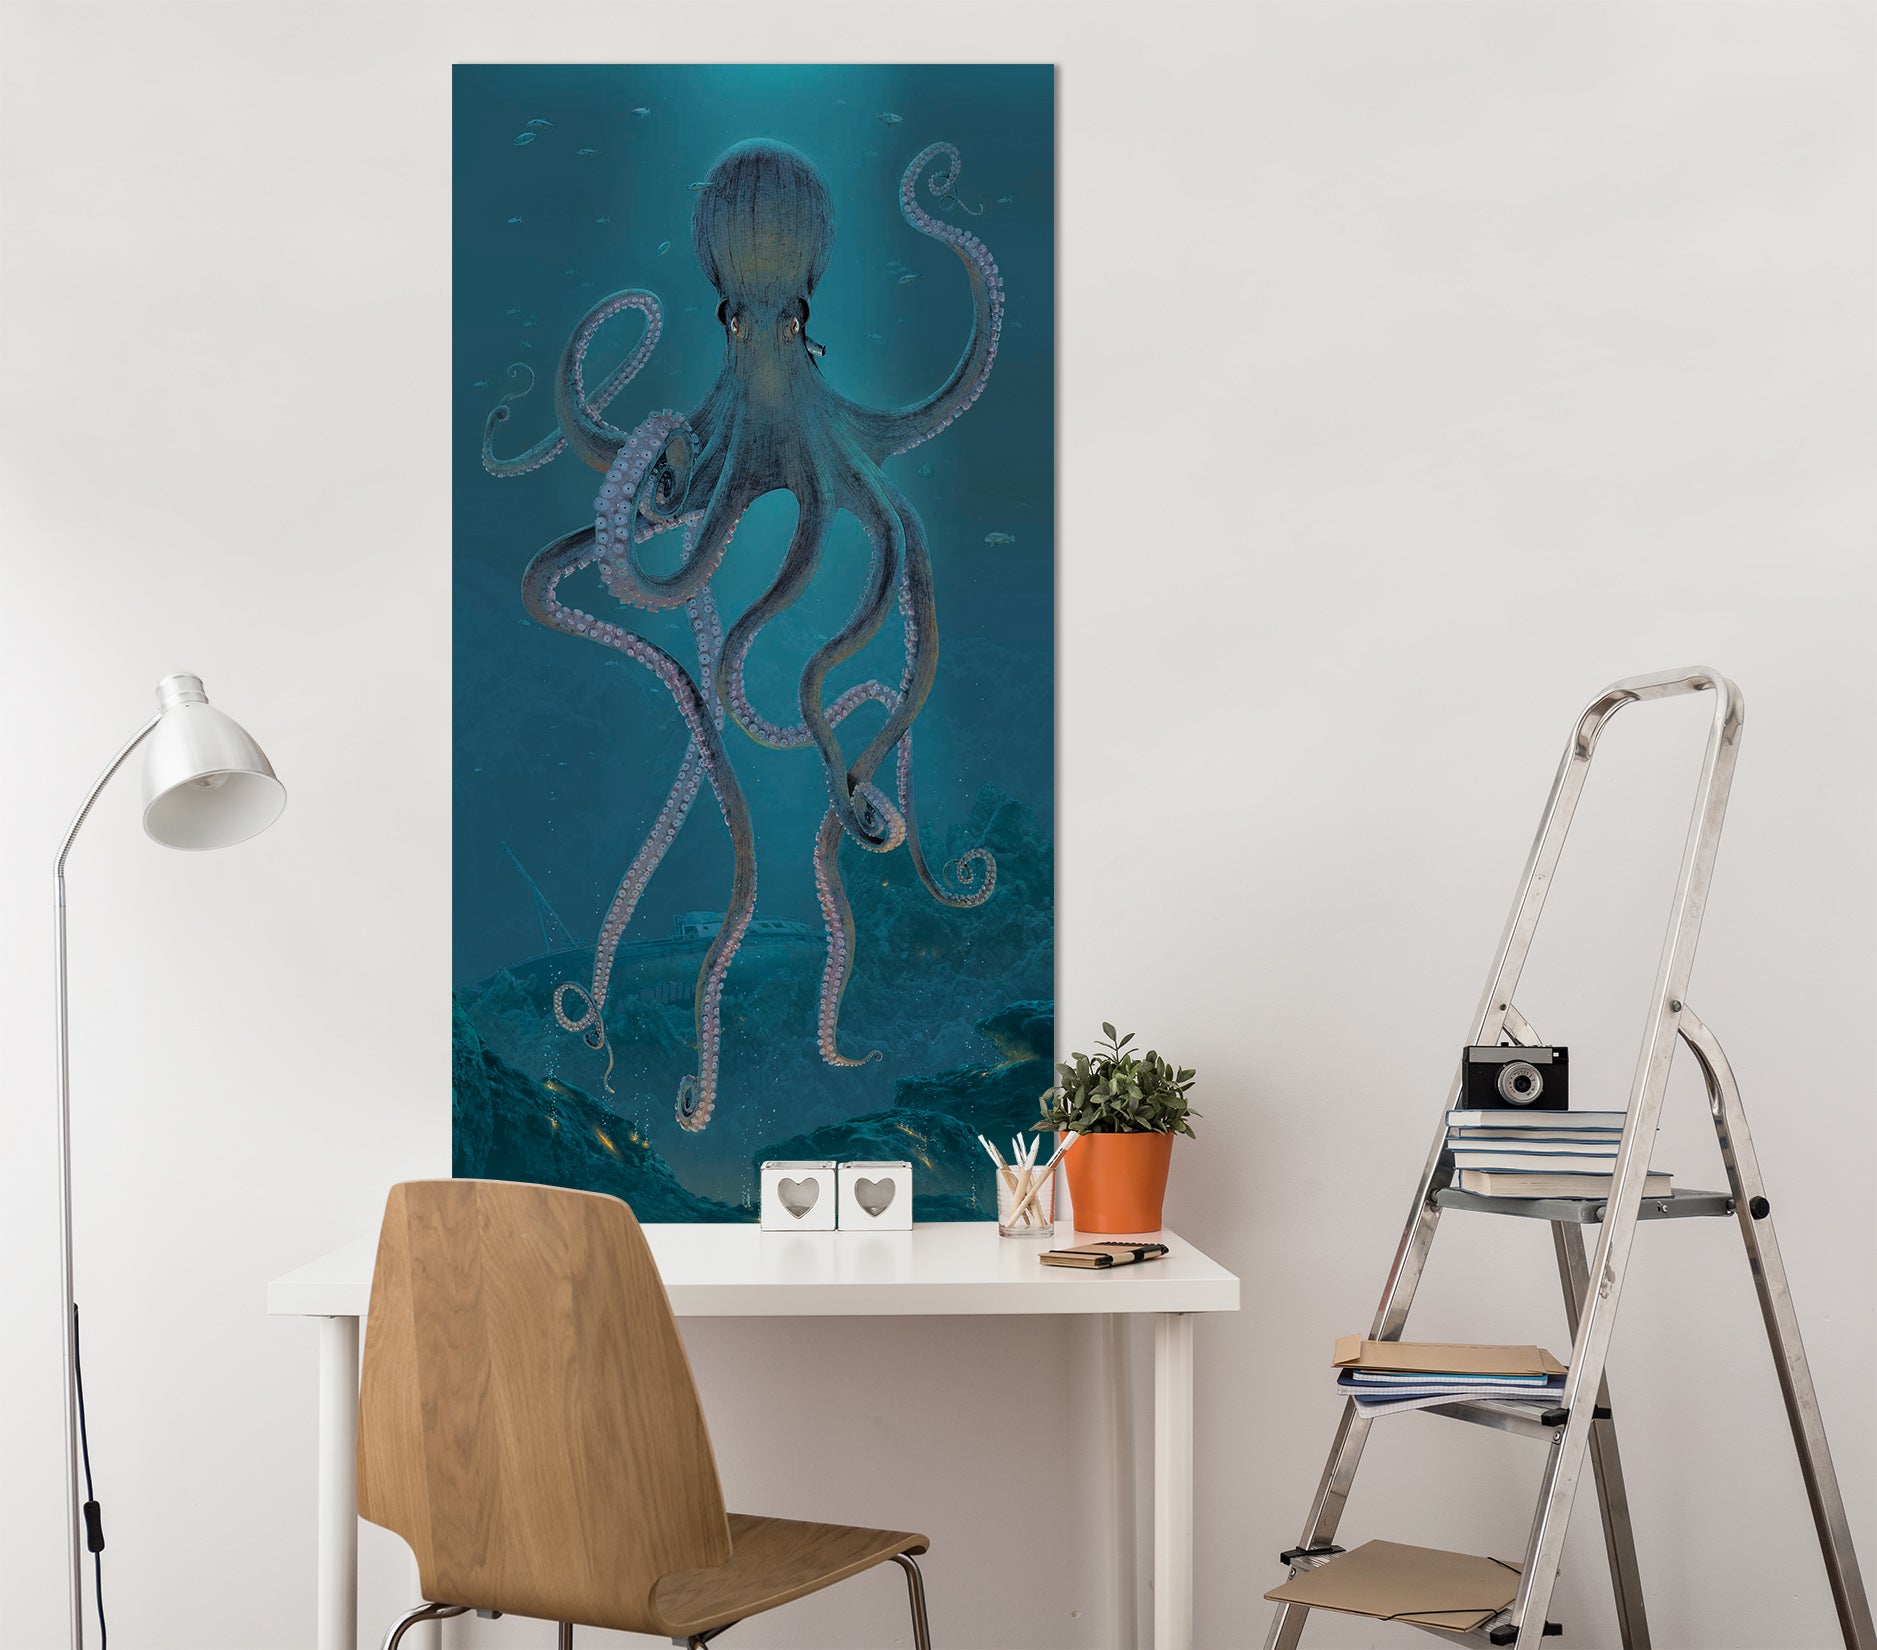 3D Giant Octopus 039 Vincent Hie Wall Sticker